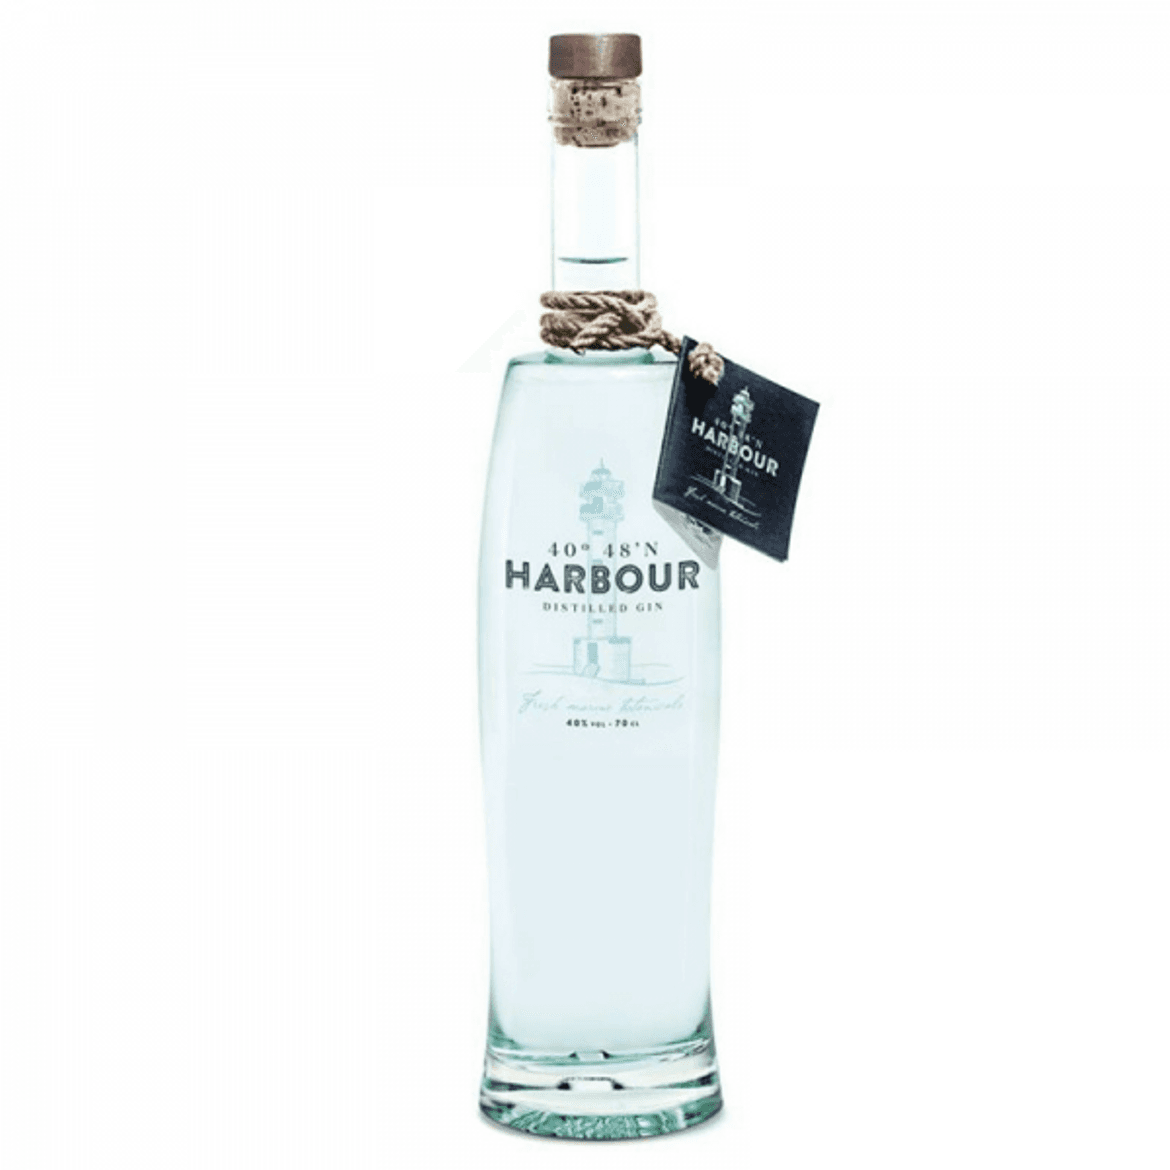 40° 48n Harbour gin 40%